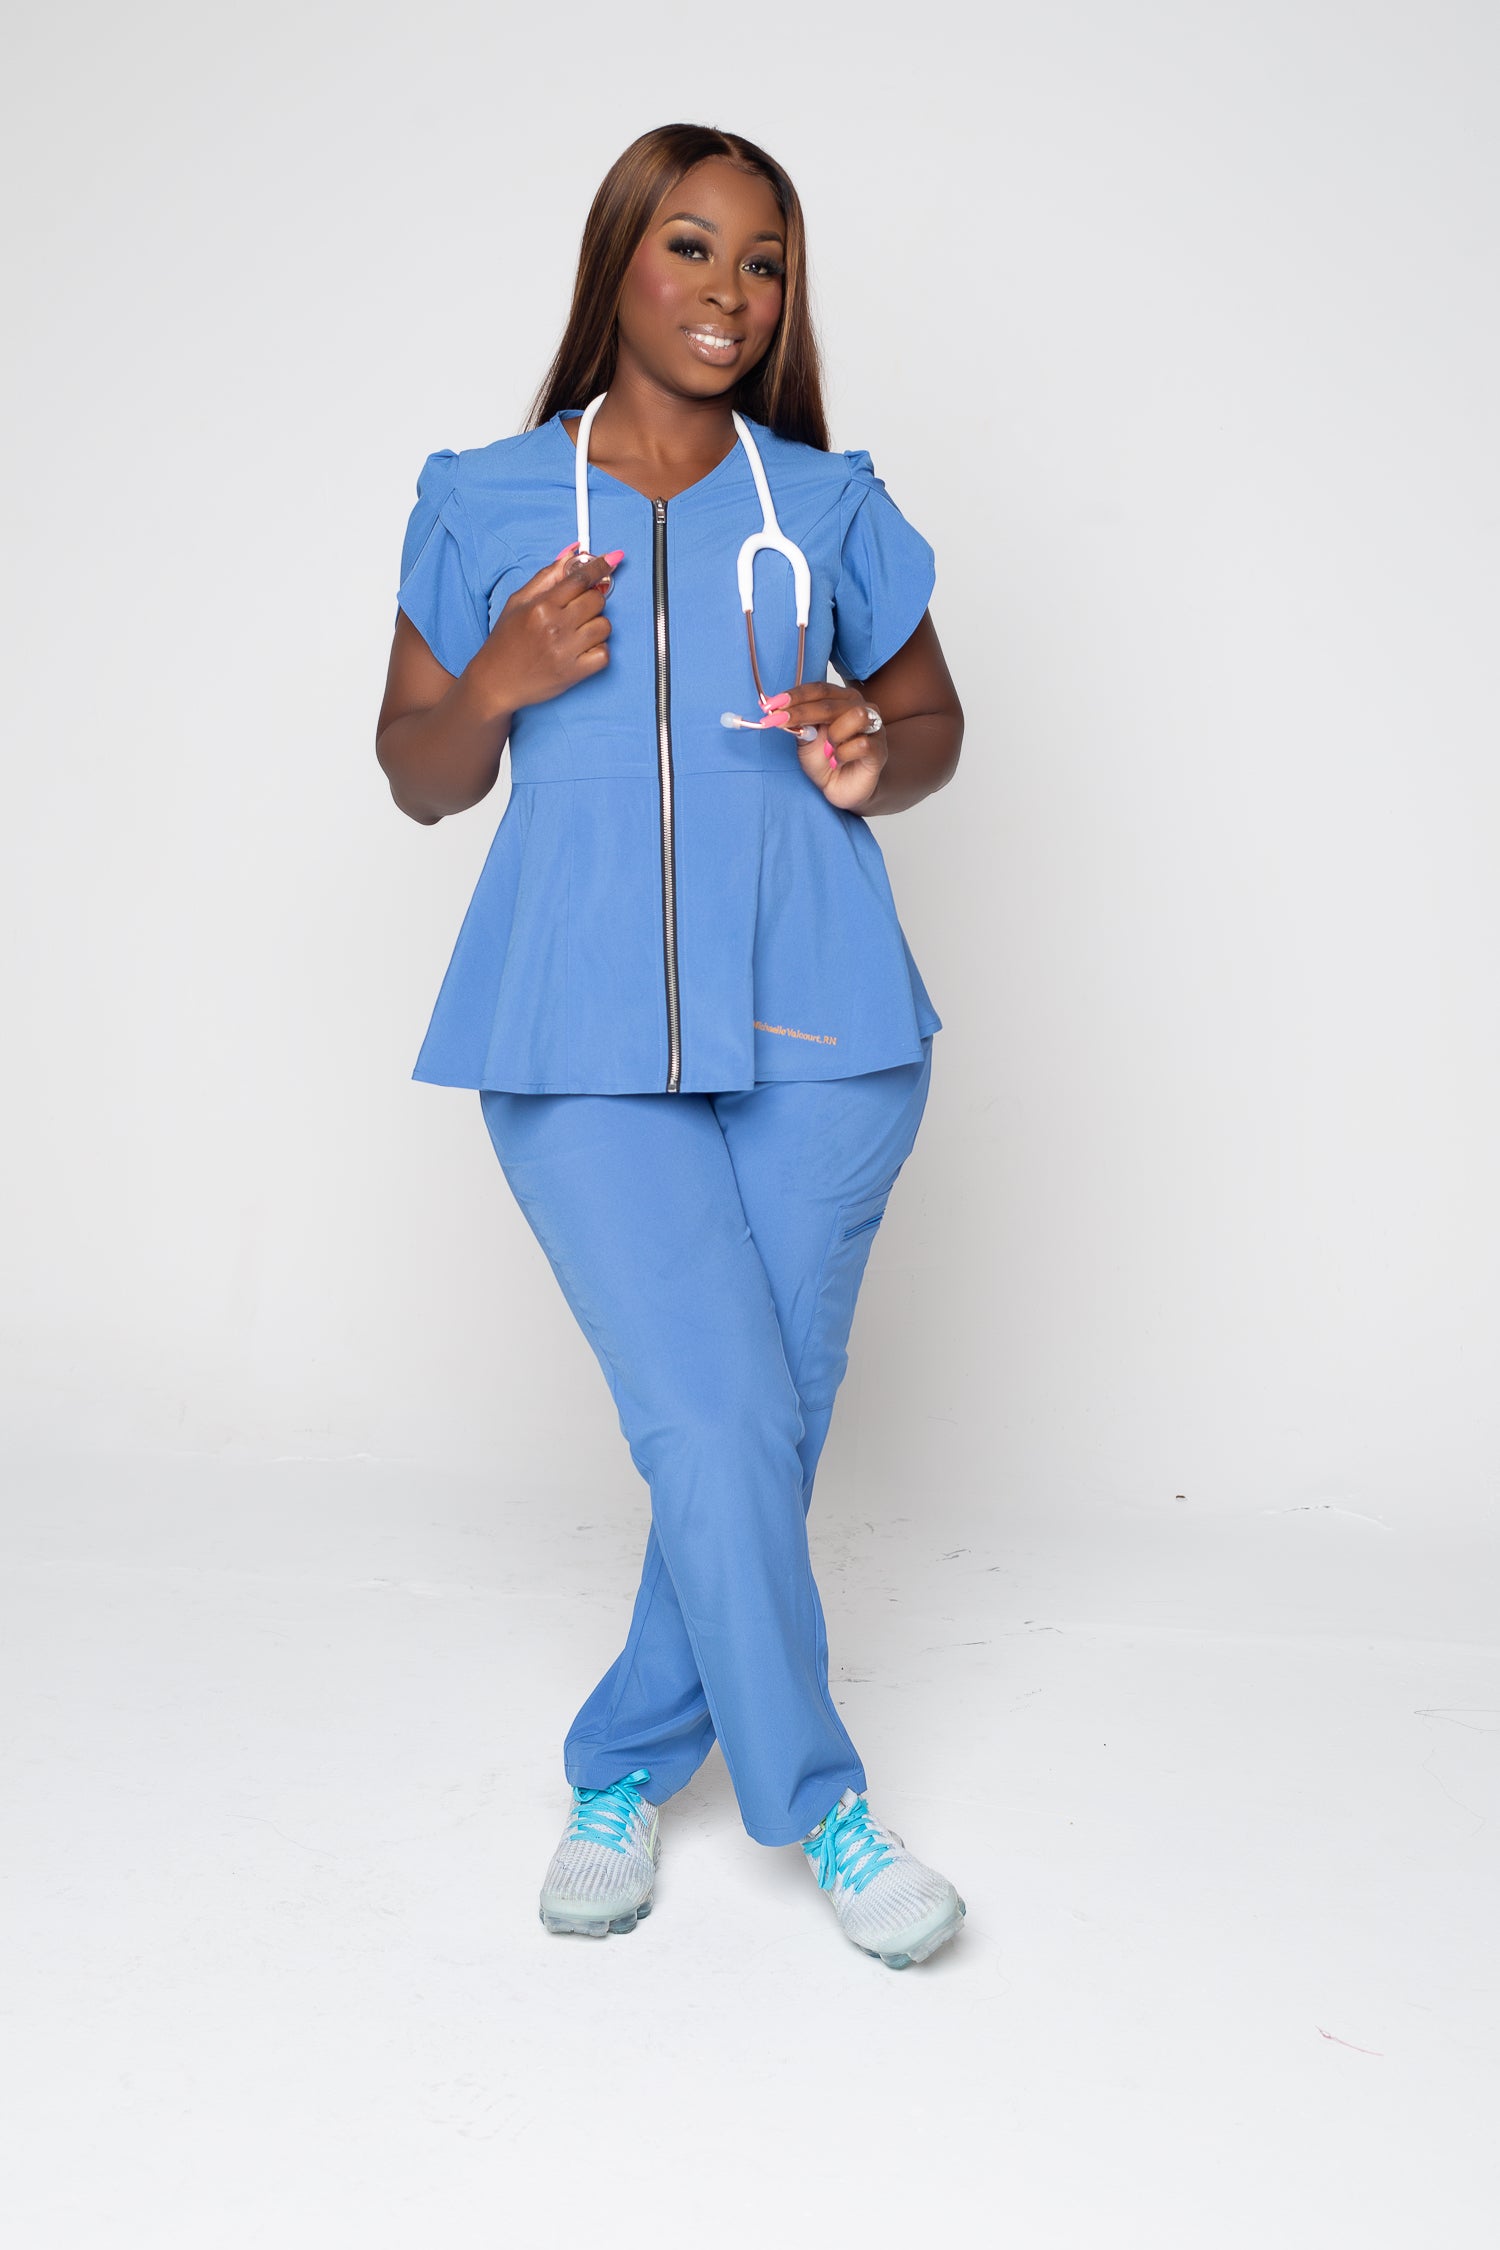 Women's Medical Scrub Sets, Uniform Scrub Tops